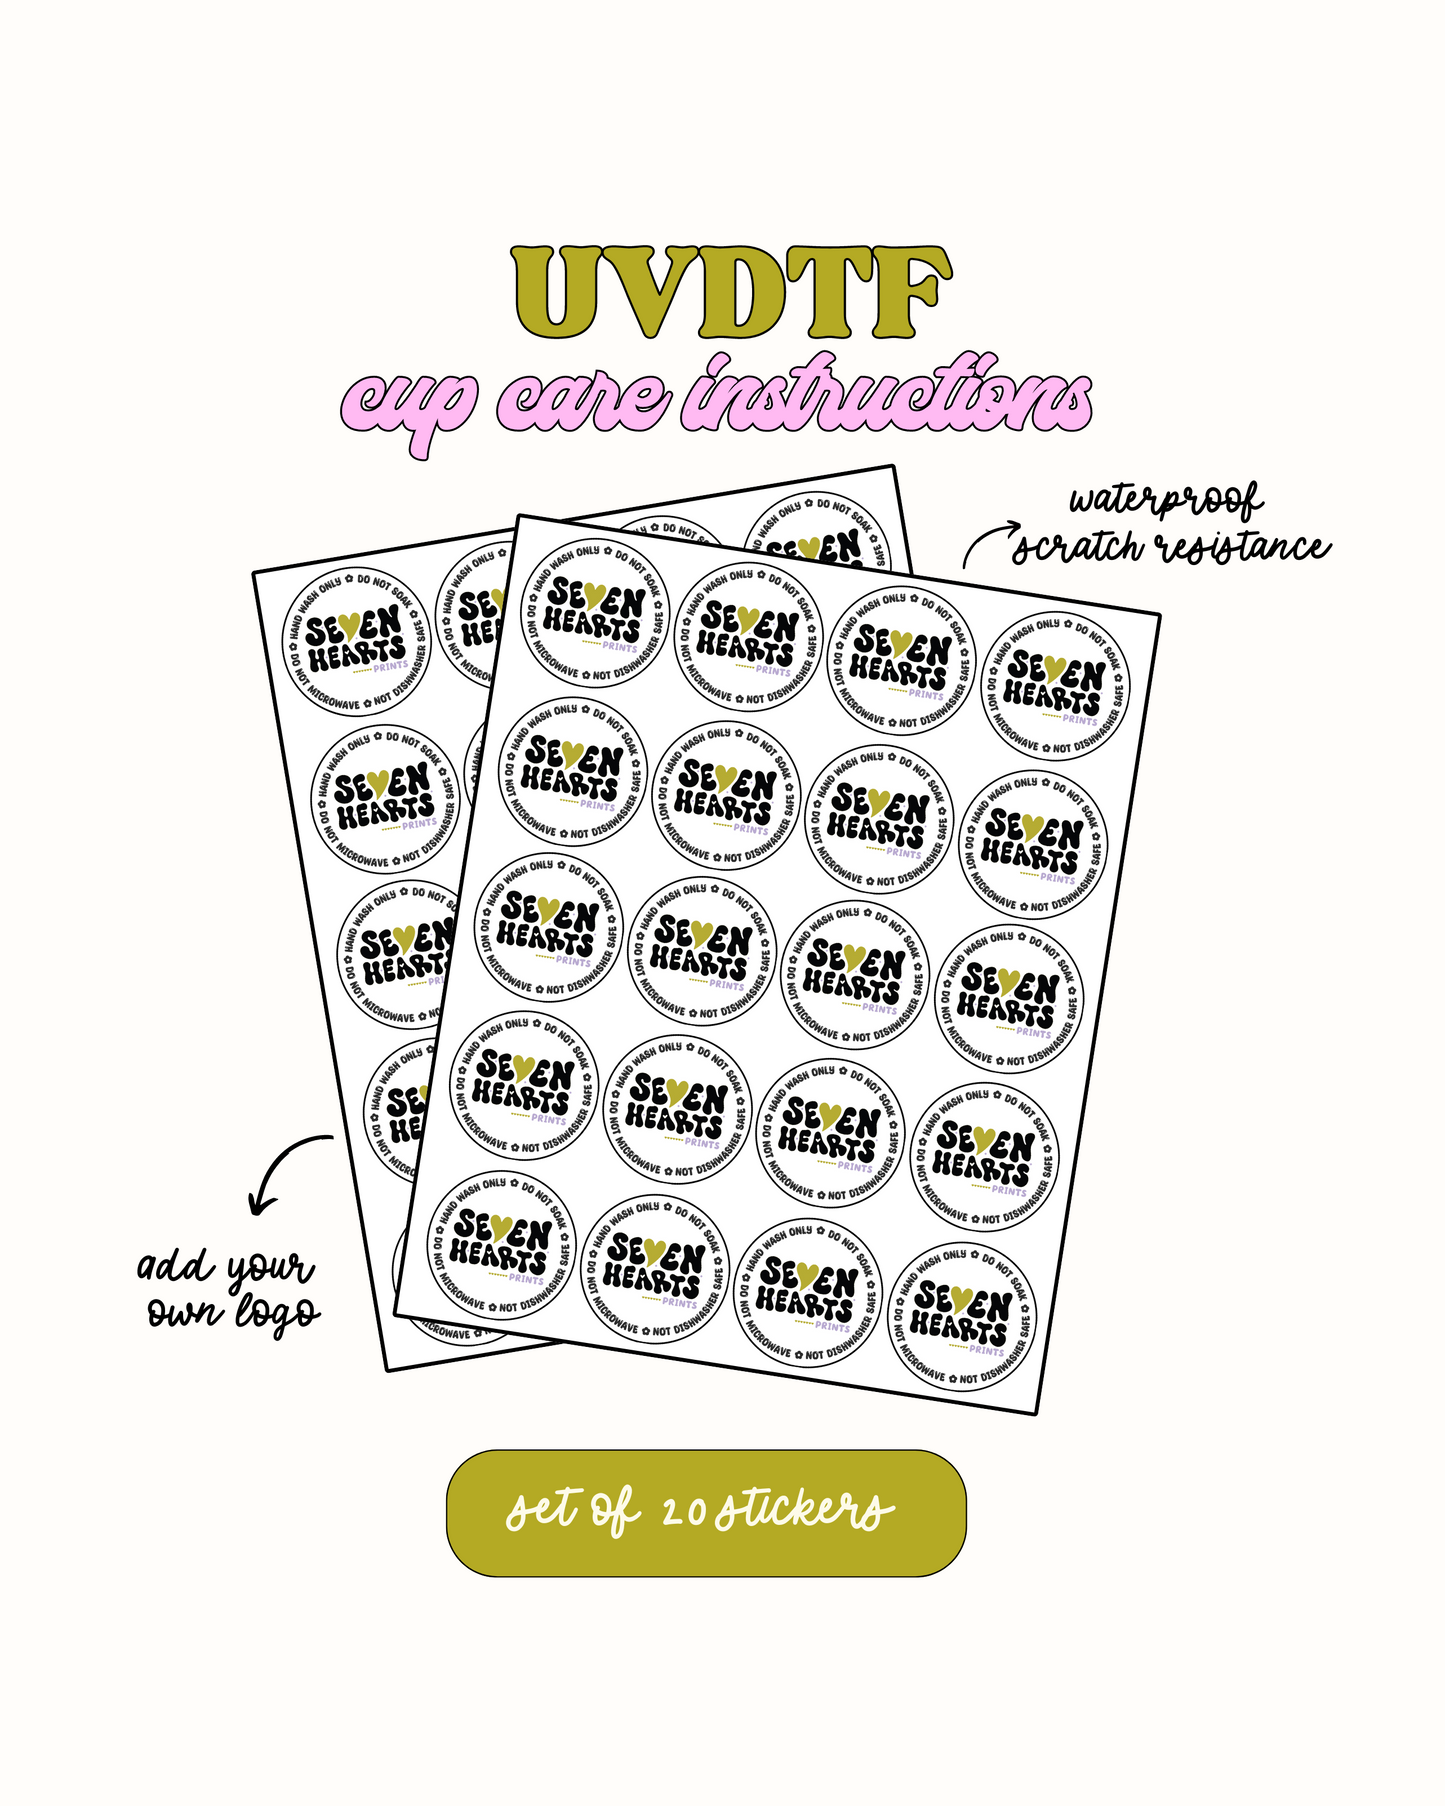 Custom UVDTF Cup Care instructions (Upload)